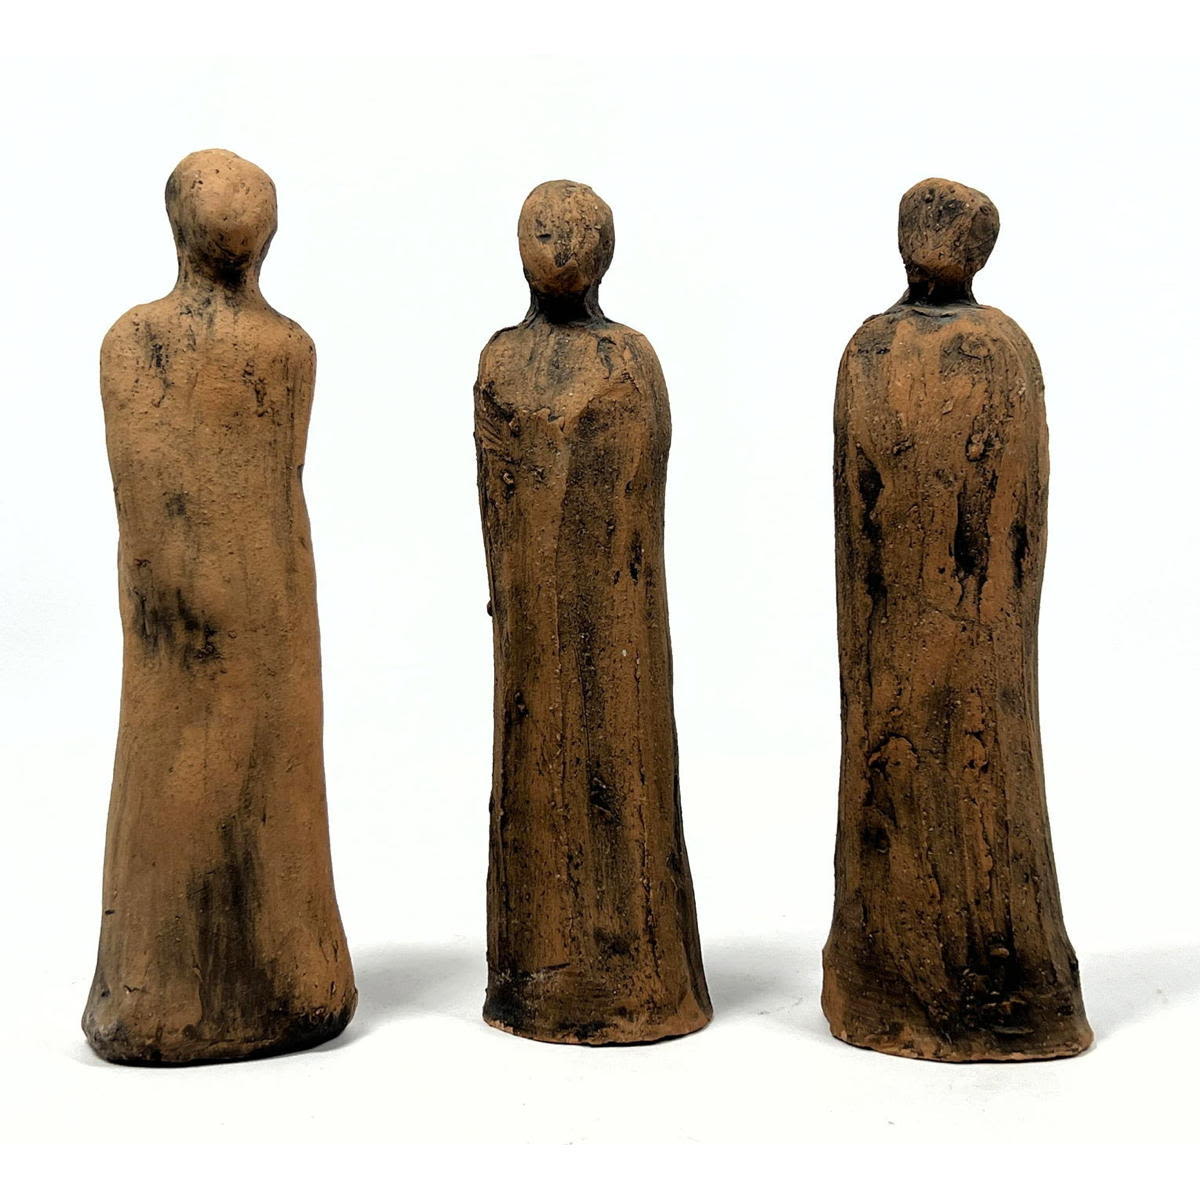 Three modernist terracotta sculptures.